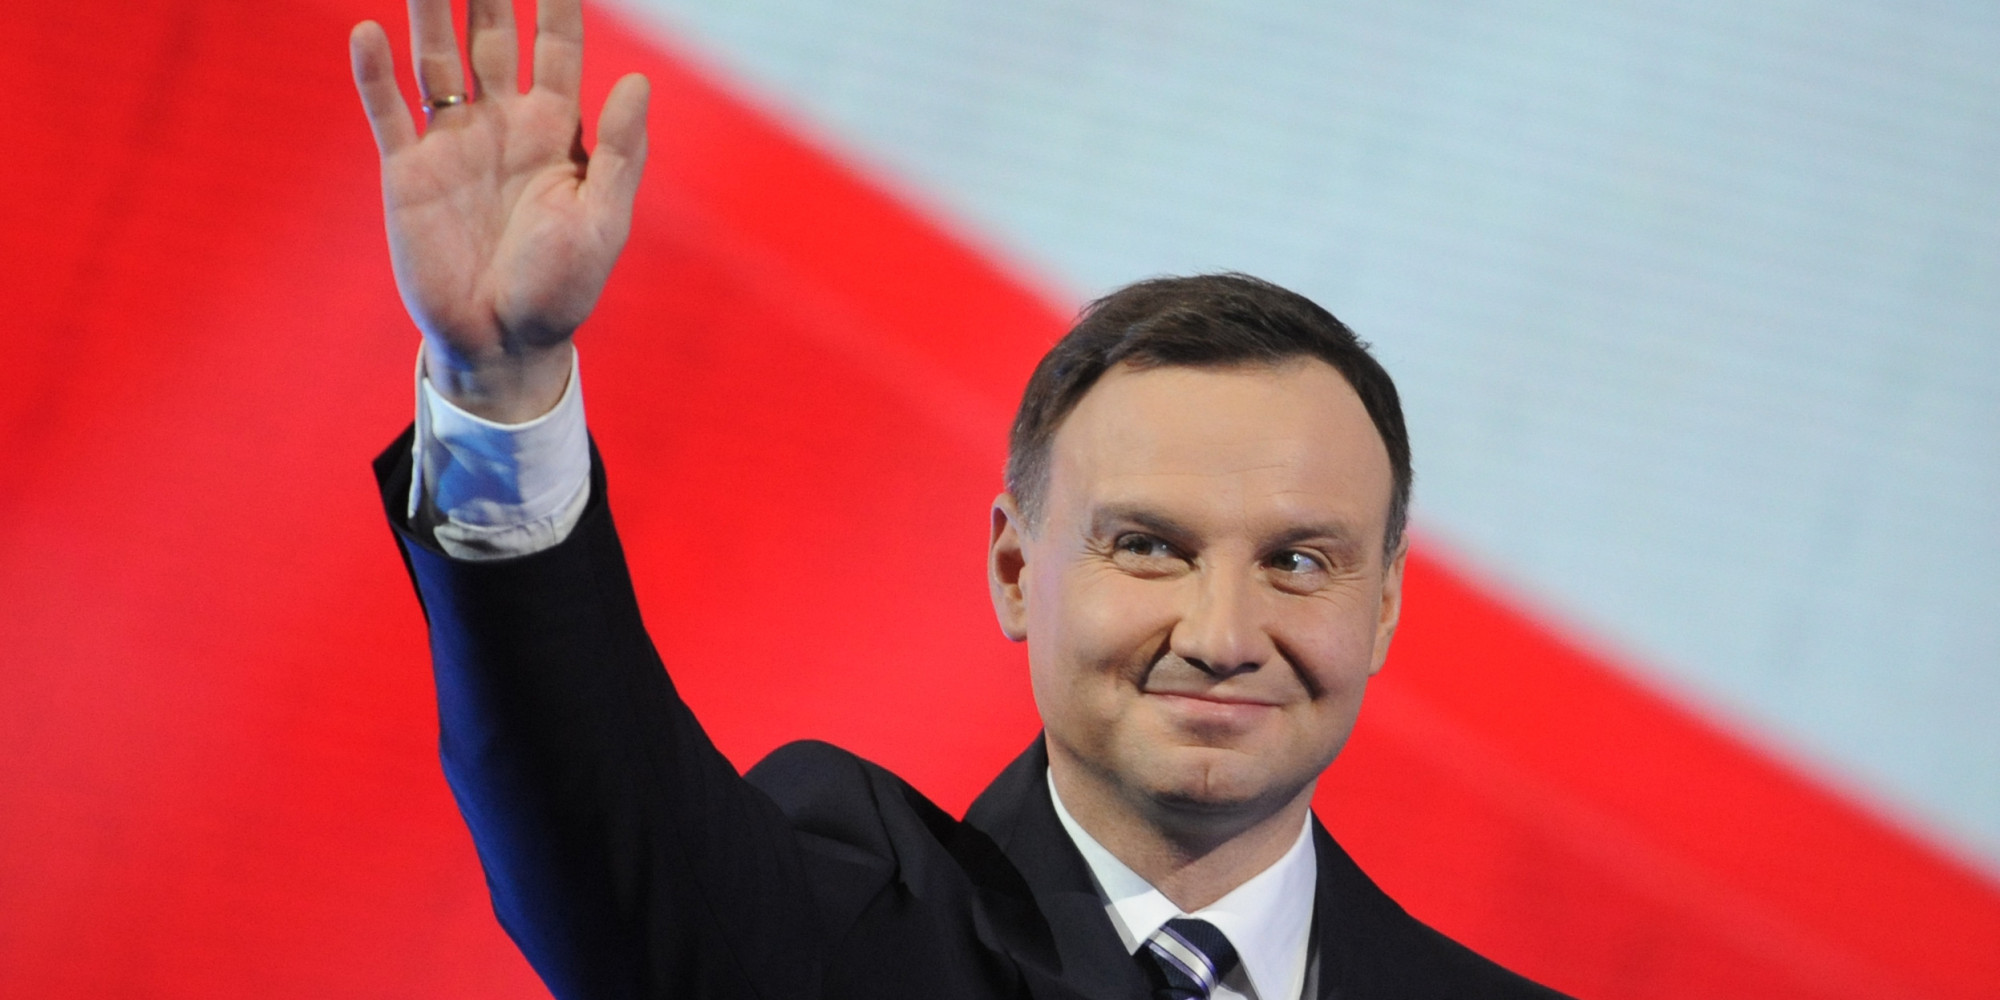 Andrzej Duda Elected Poland S New President Incumbent Bronislaw Komorowski Concedes Defeat